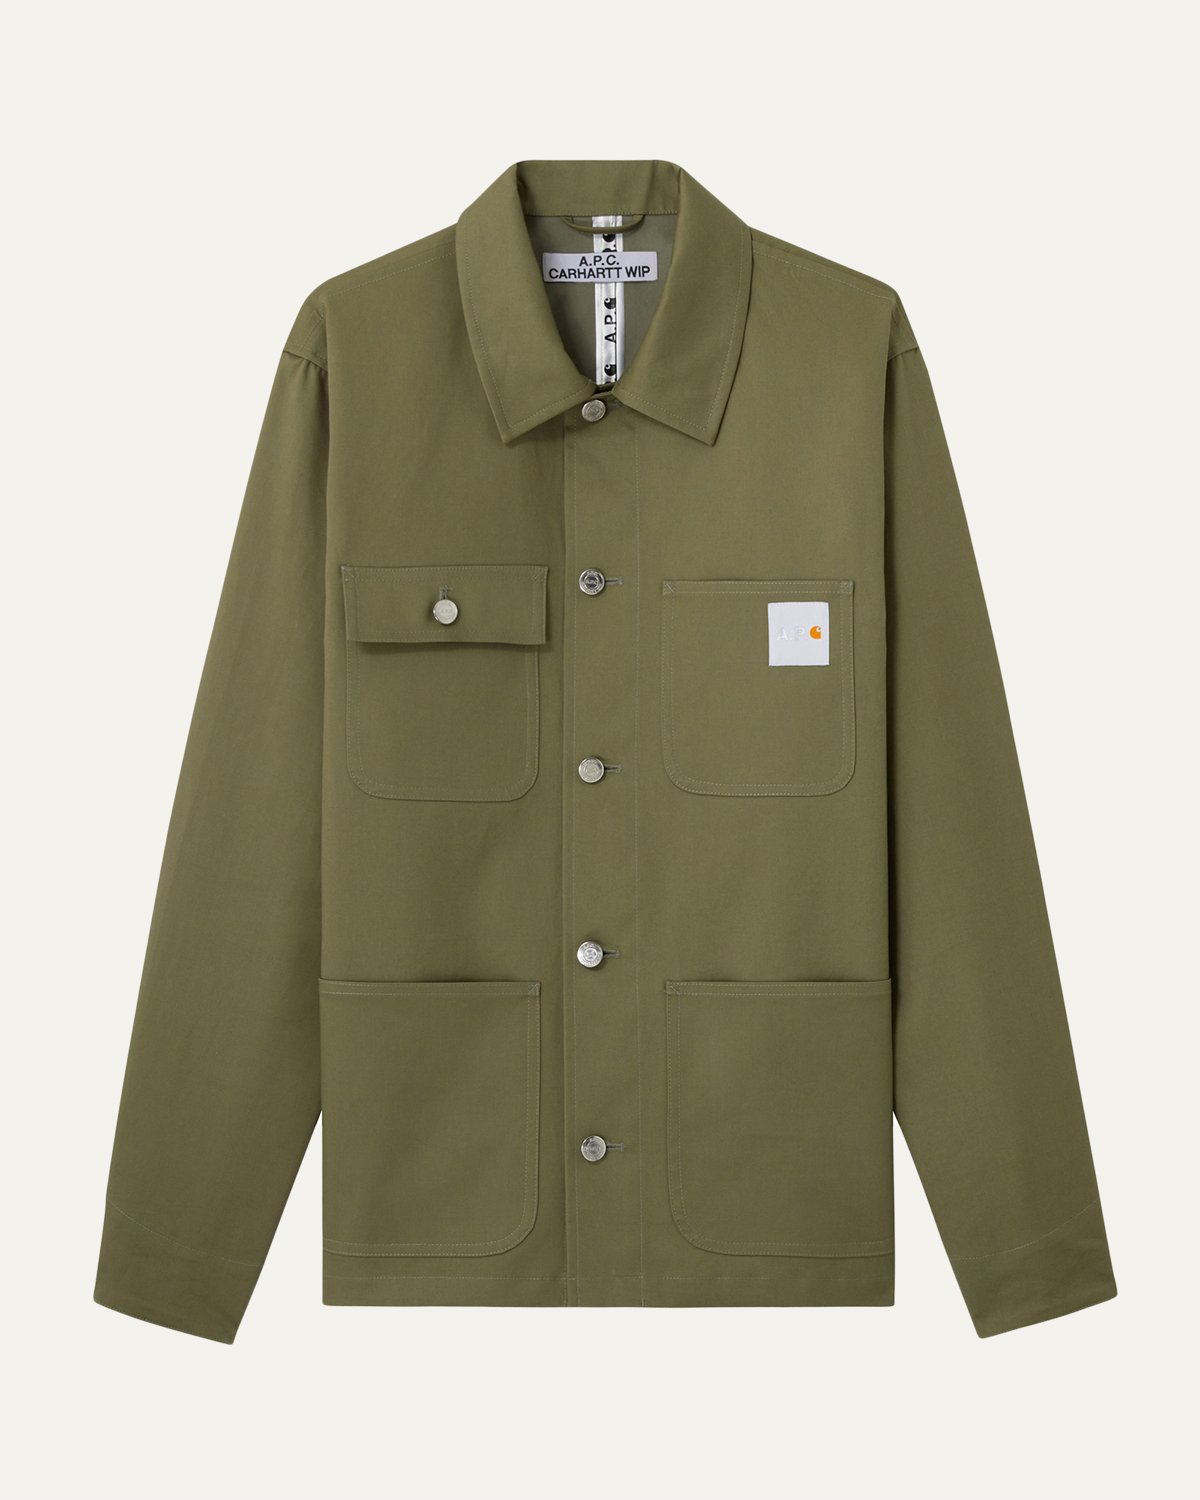 A.P.C. x Carhartt WIP - Work Jacket - Outerwear - Green - Image 1